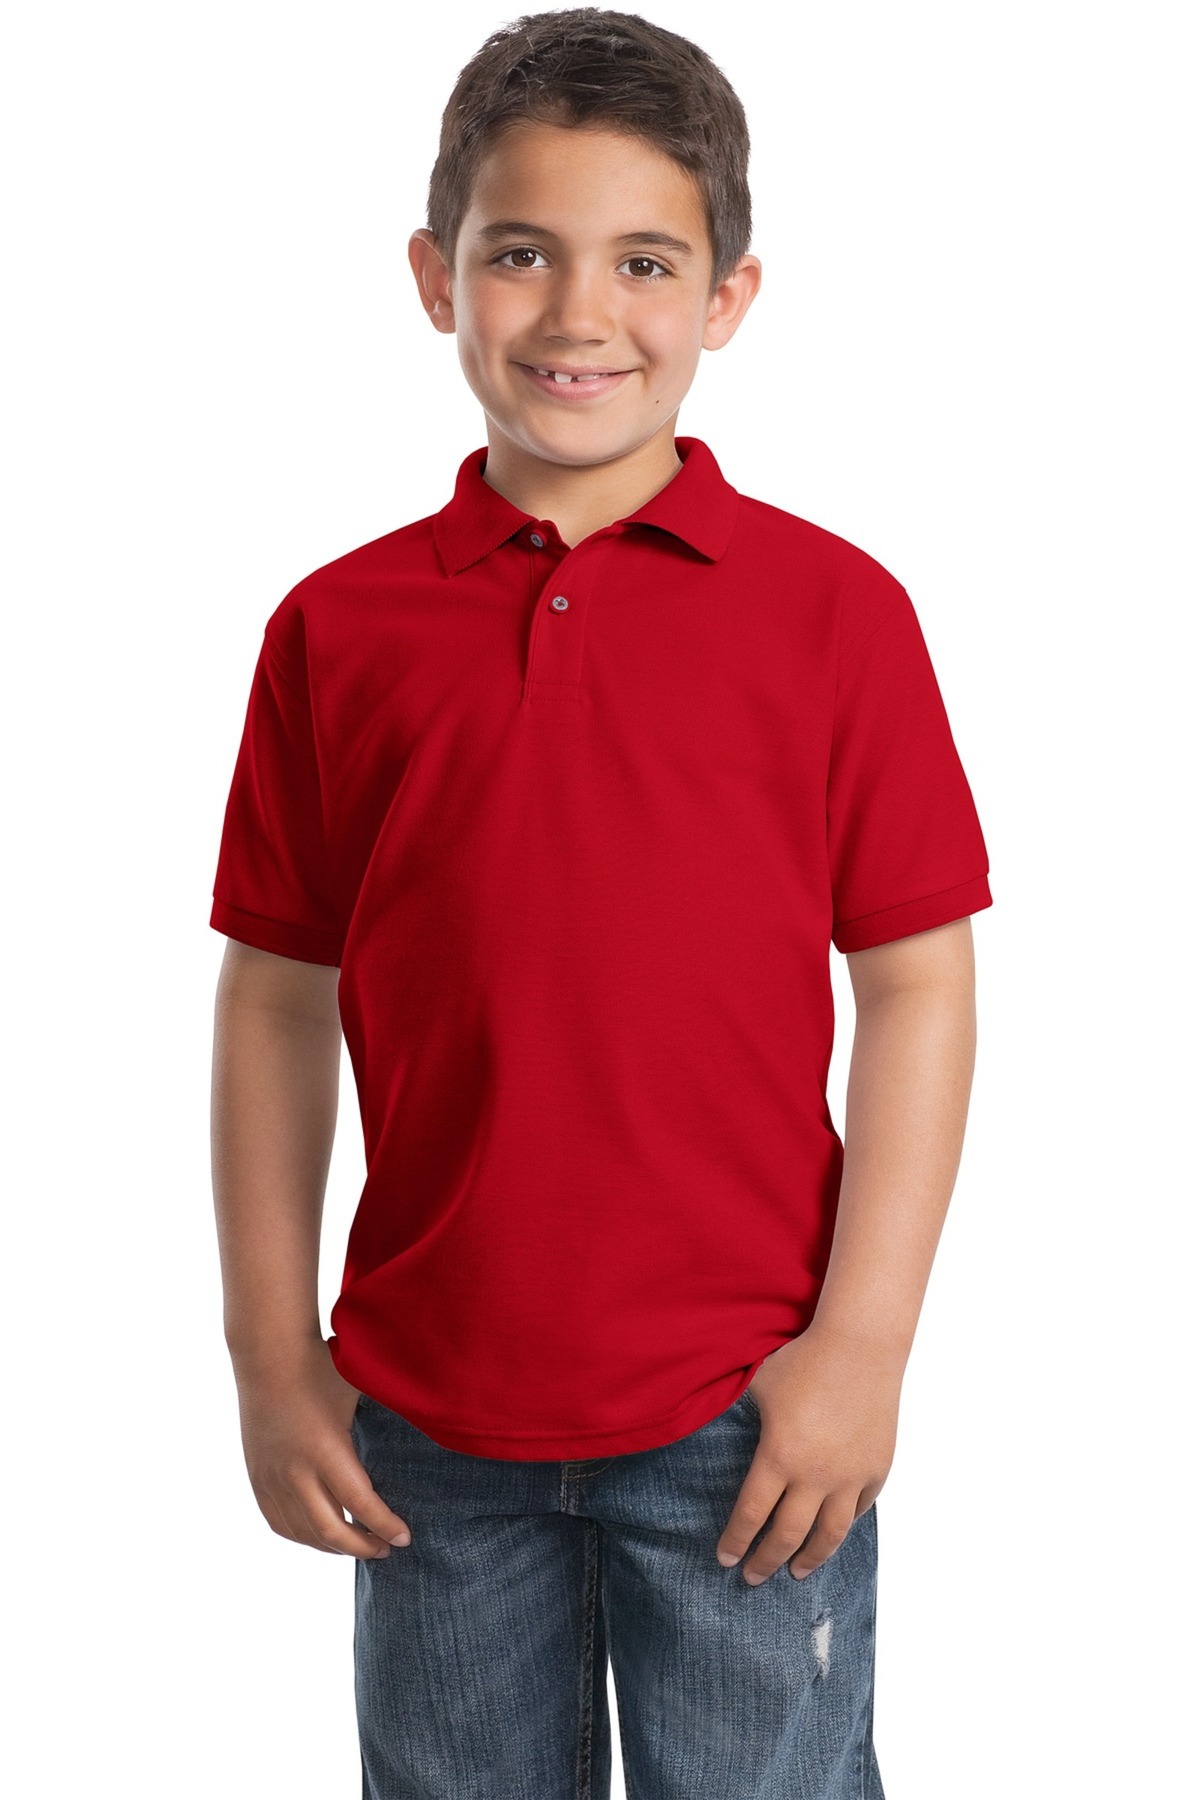 Boys polo. Polo Shirt boy. Красный поло для мальчика. Polo t Shirt boys. Красная футболка поло с черными брюками на мальчика.